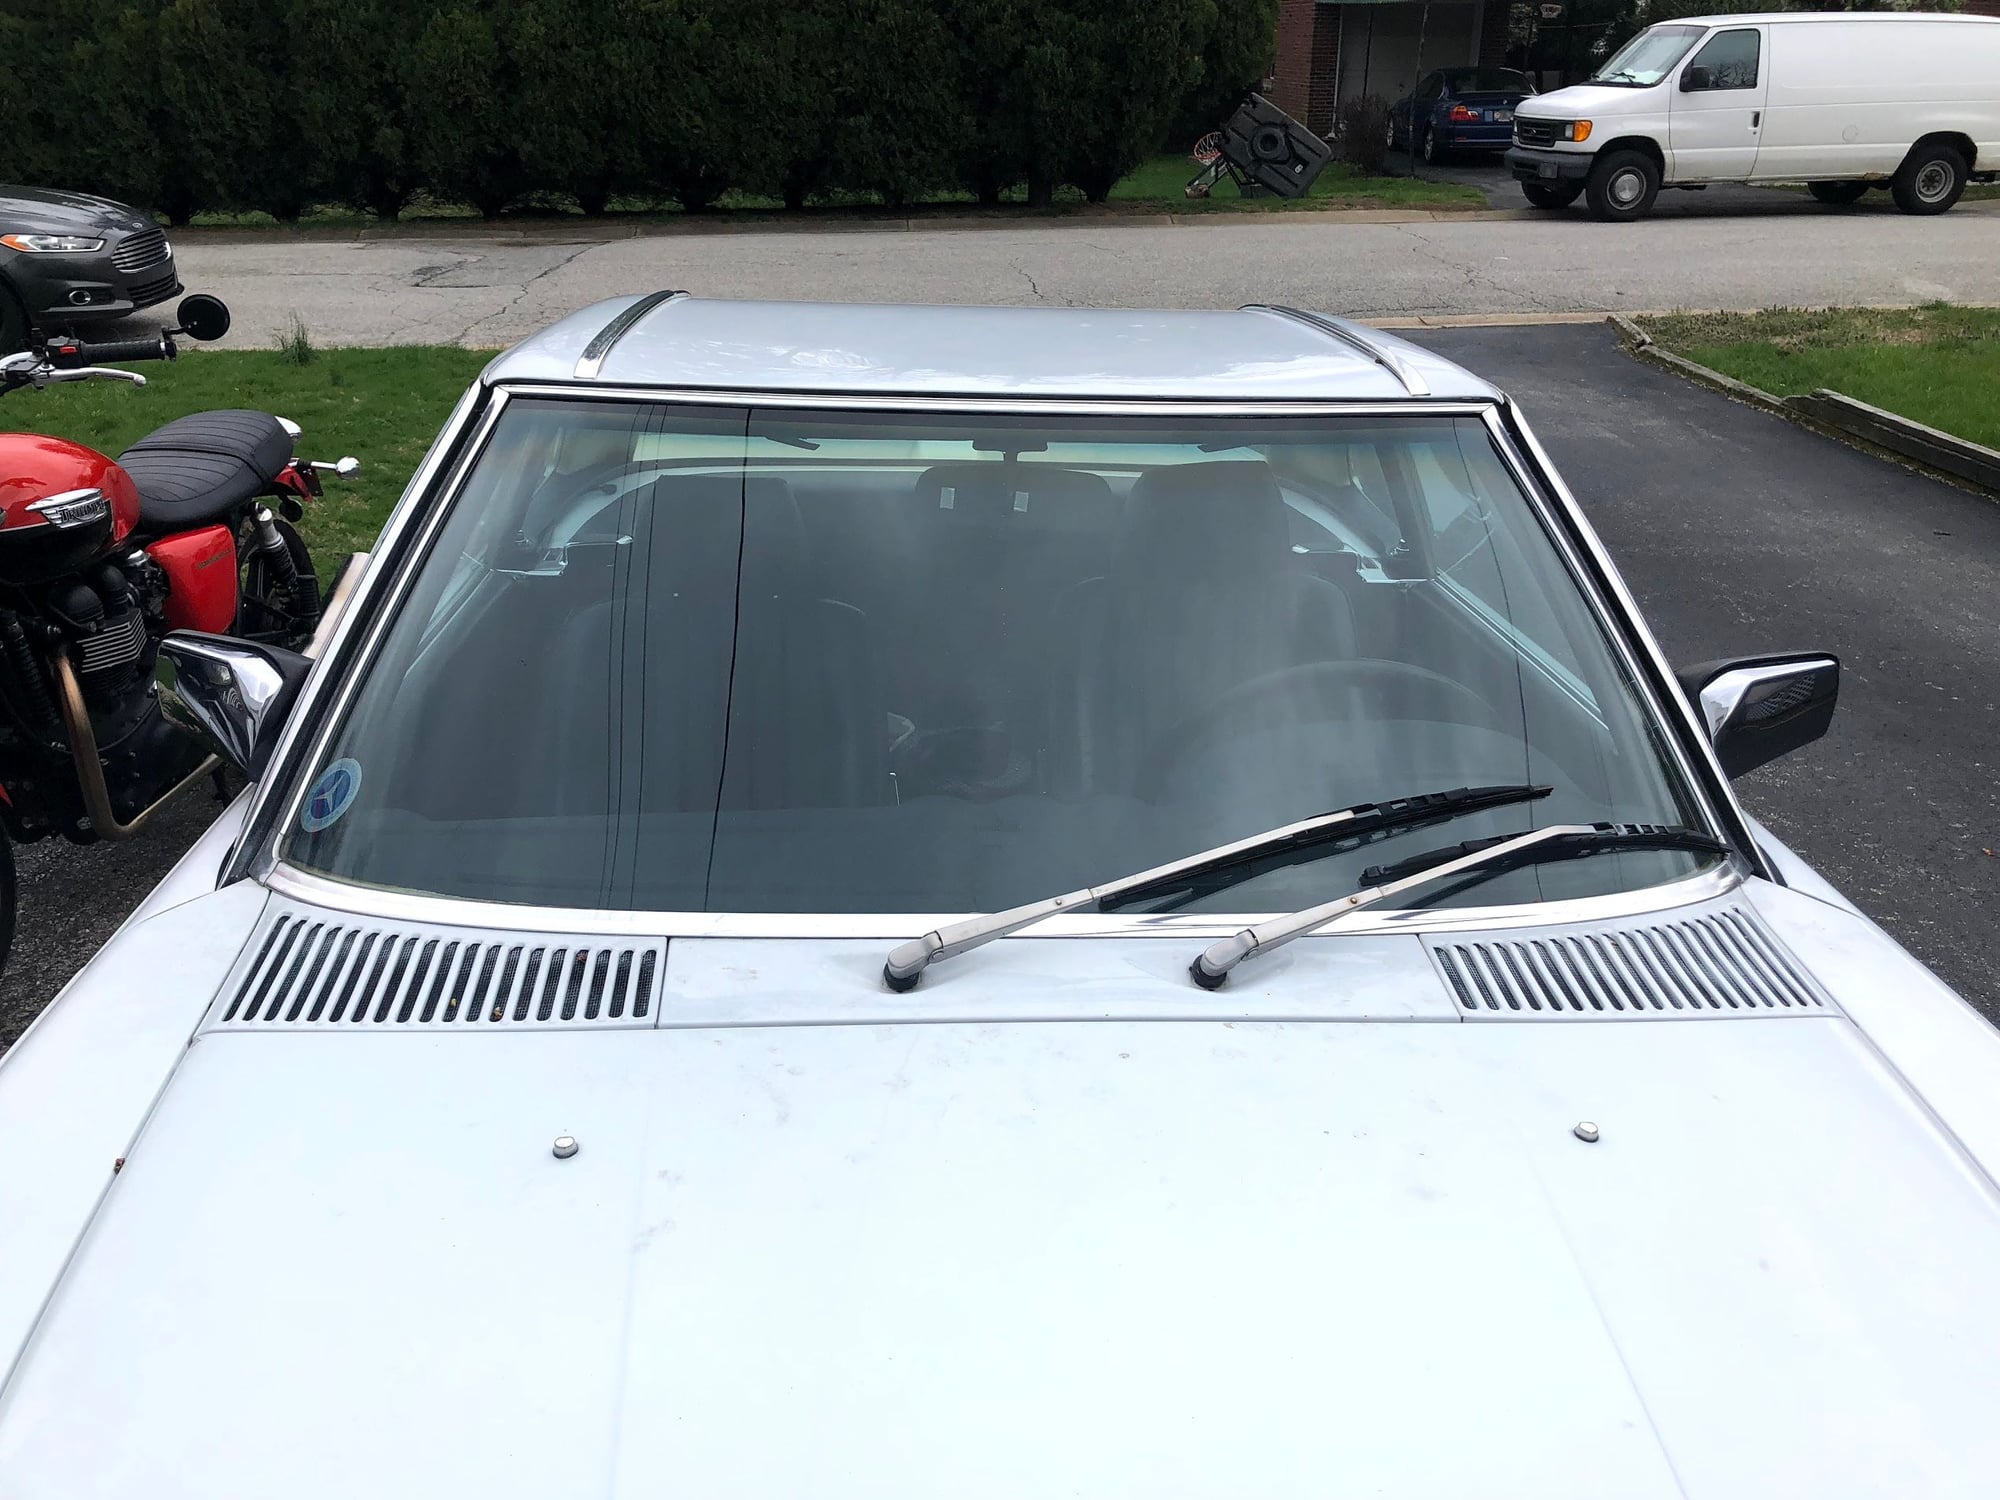 Miscellaneous - Hardtop convertible roof - '86 560SL - white. Delaware - Used - 1986 Mercedes-Benz 560SL - Wilmington, DE 19809, United States